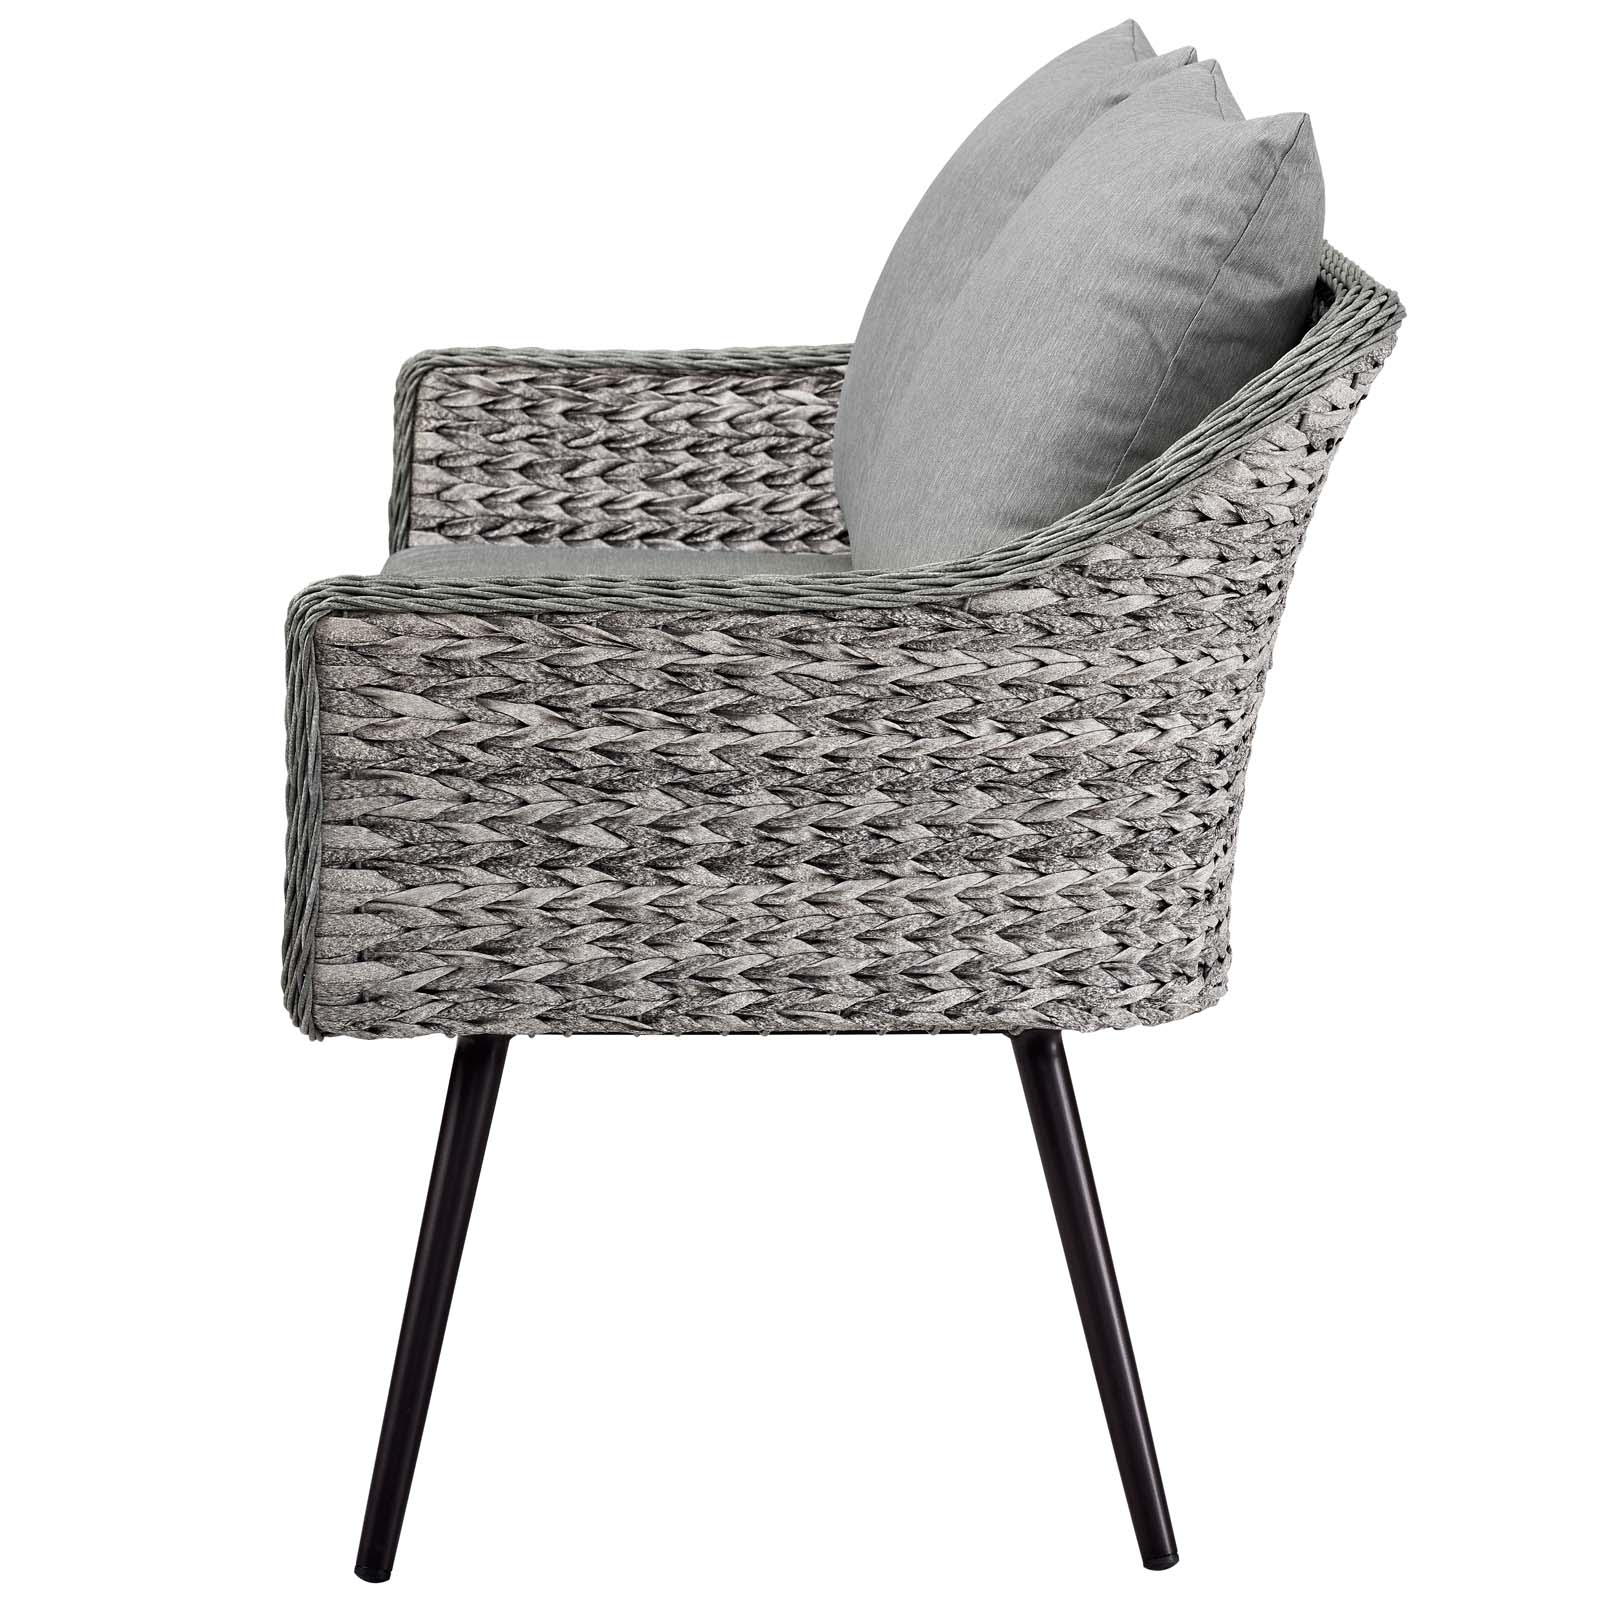 Contemporary Modern Urban Designer Outdoor Patio Balcony Garden Furniture Lounge Sofa and Chair Set, Aluminum Fabric Wicker Rattan, Grey Gray - image 3 of 8